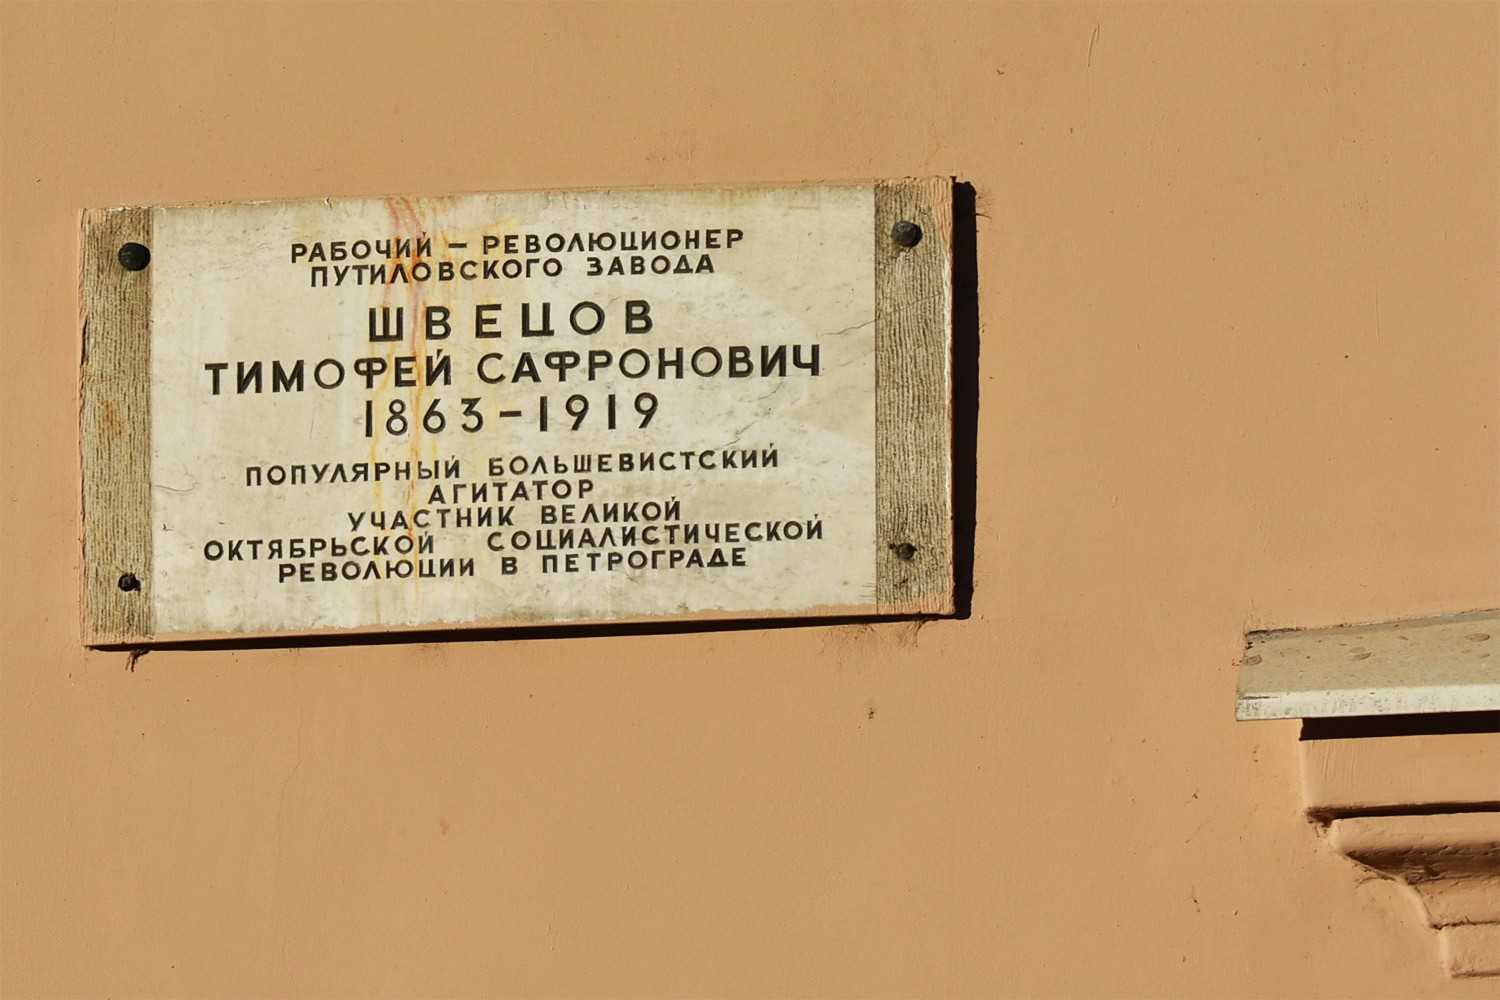 Saint Petersburg, Проспект Стачек, 16 (подъезды 1-11). Saint Petersburg — Memorial plaques